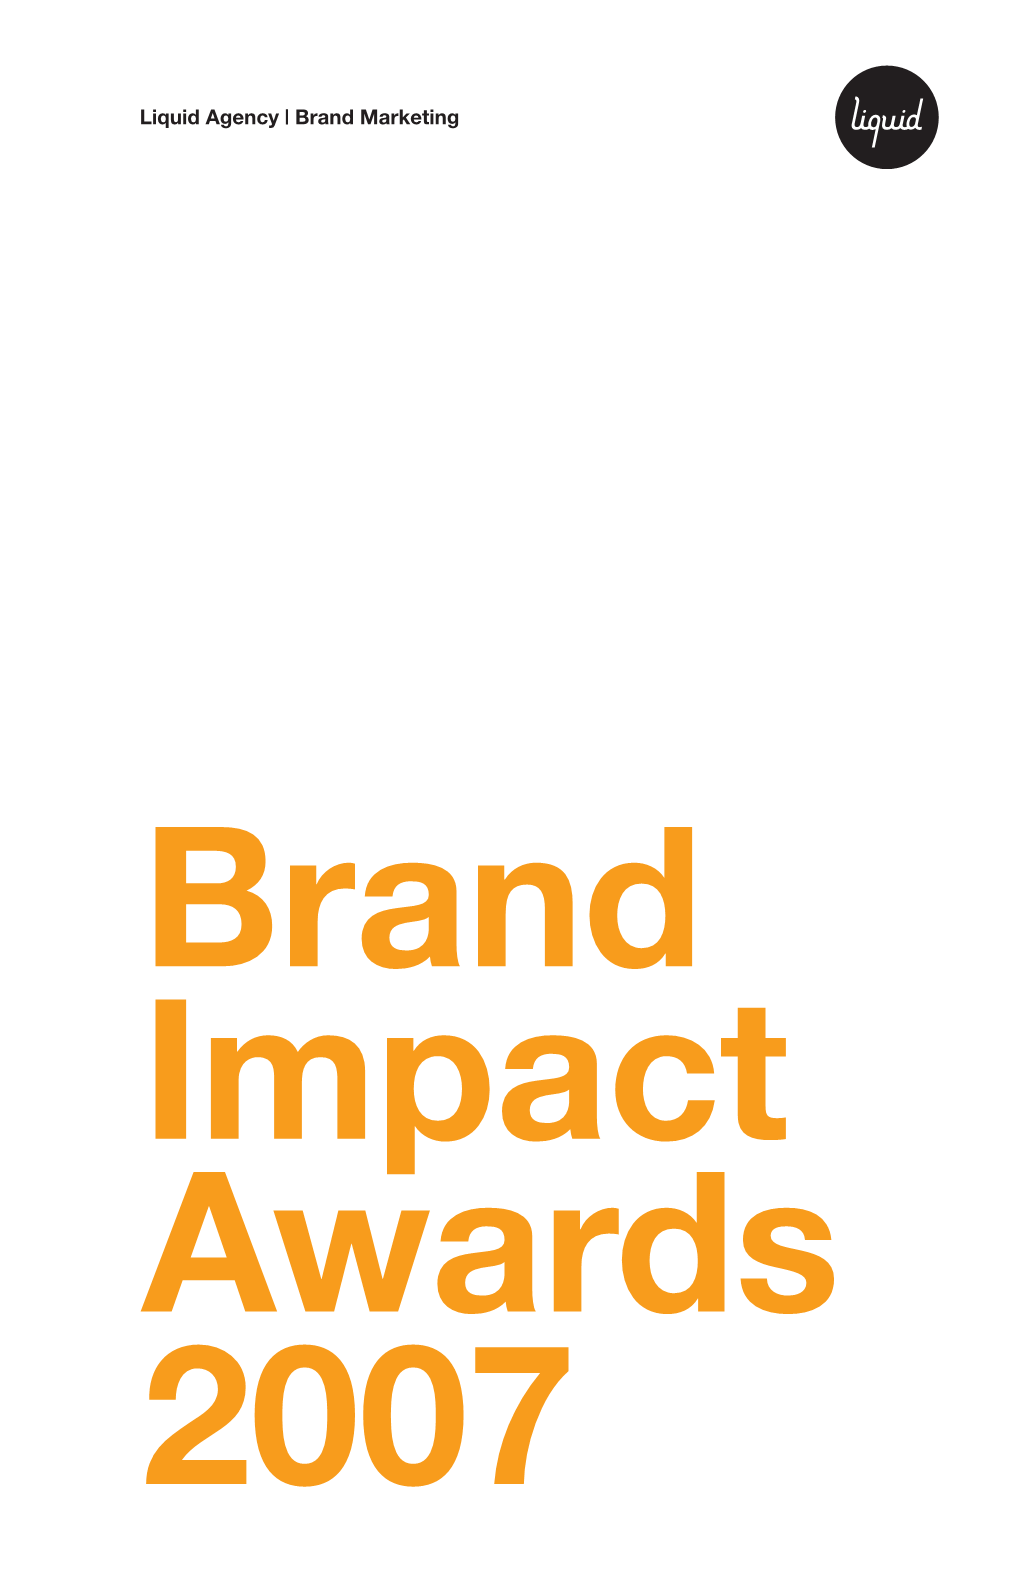 Brand Impact Awards 2007 Presented By: Liquid Agency | Brand Marketing